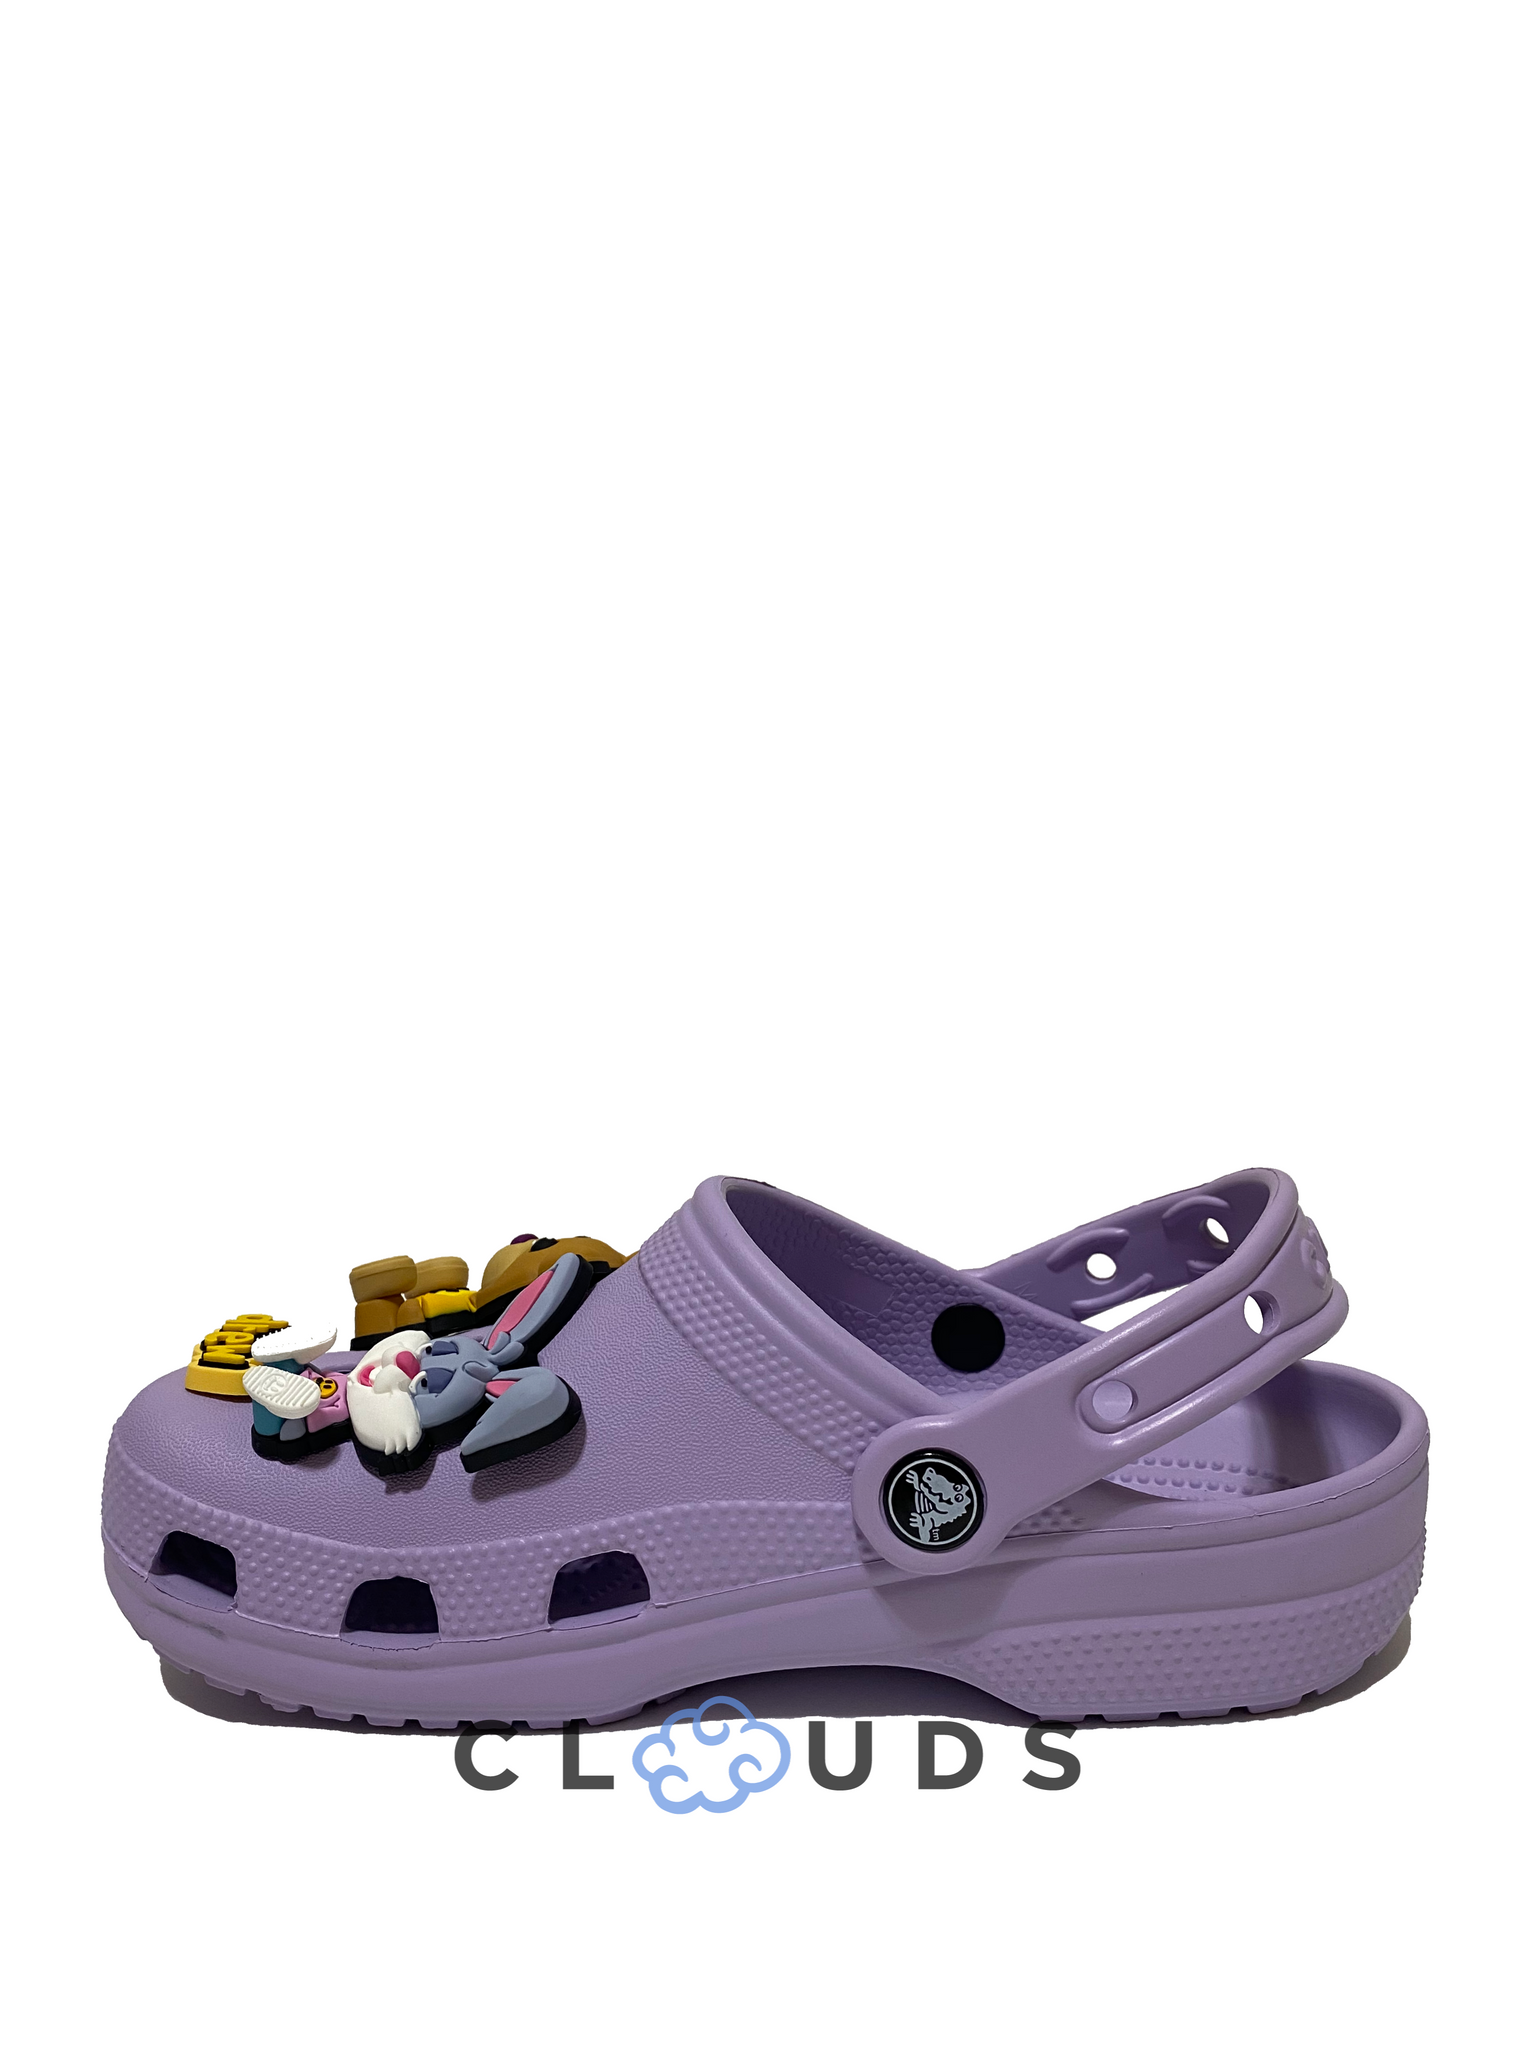 NWT Justin Bieber x Crocs Drew House Classic Clog Lavender Purple Size 15